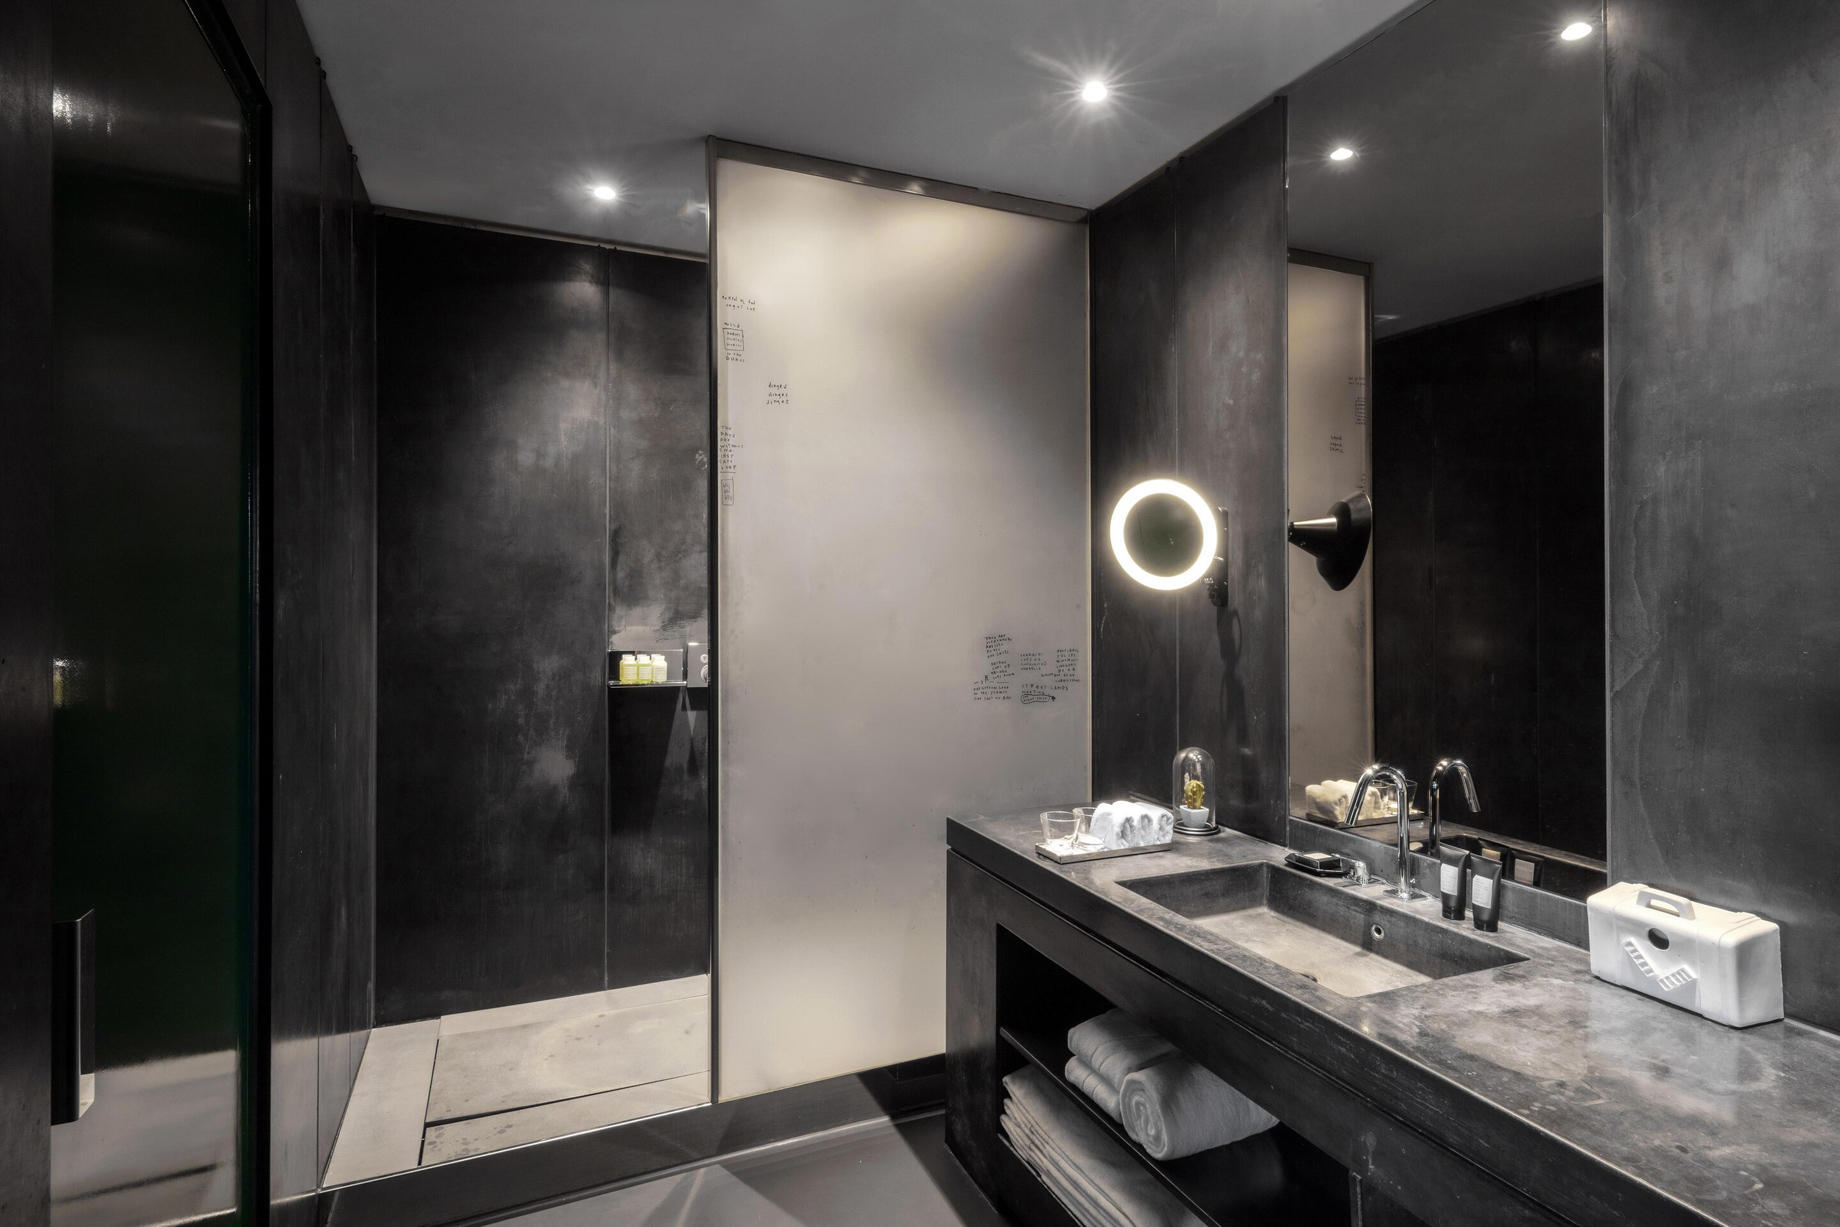 W Amsterdam Hotel – Amsterdam, Netherlands – WOW Bank One Bedroom Studio Suite Bathroom